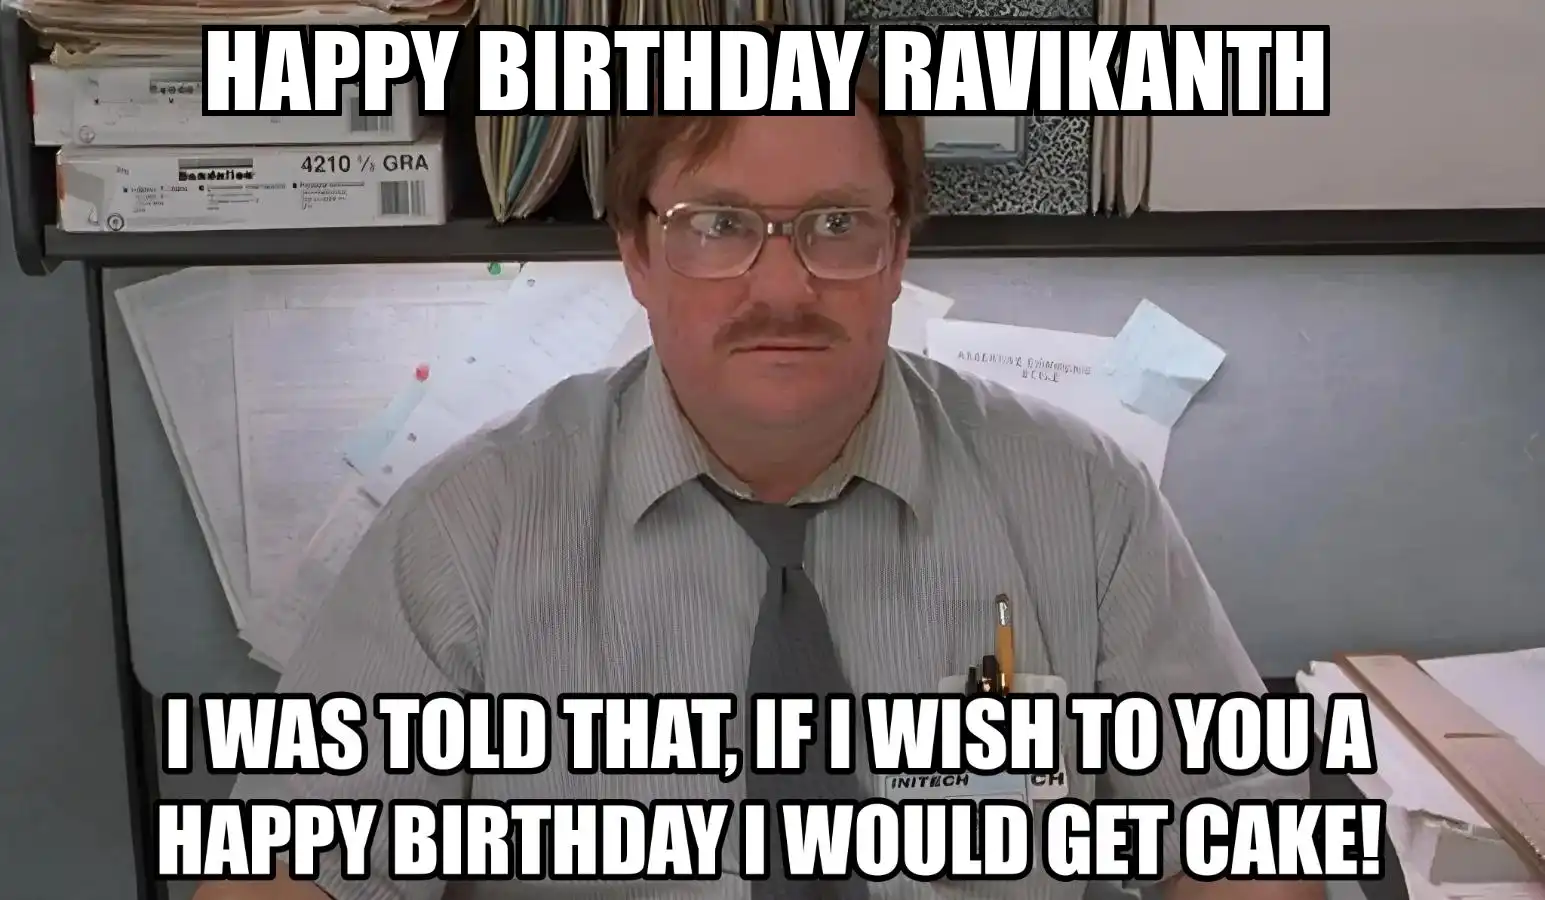 Happy Birthday Ravikanth I Would Get A Cake Meme